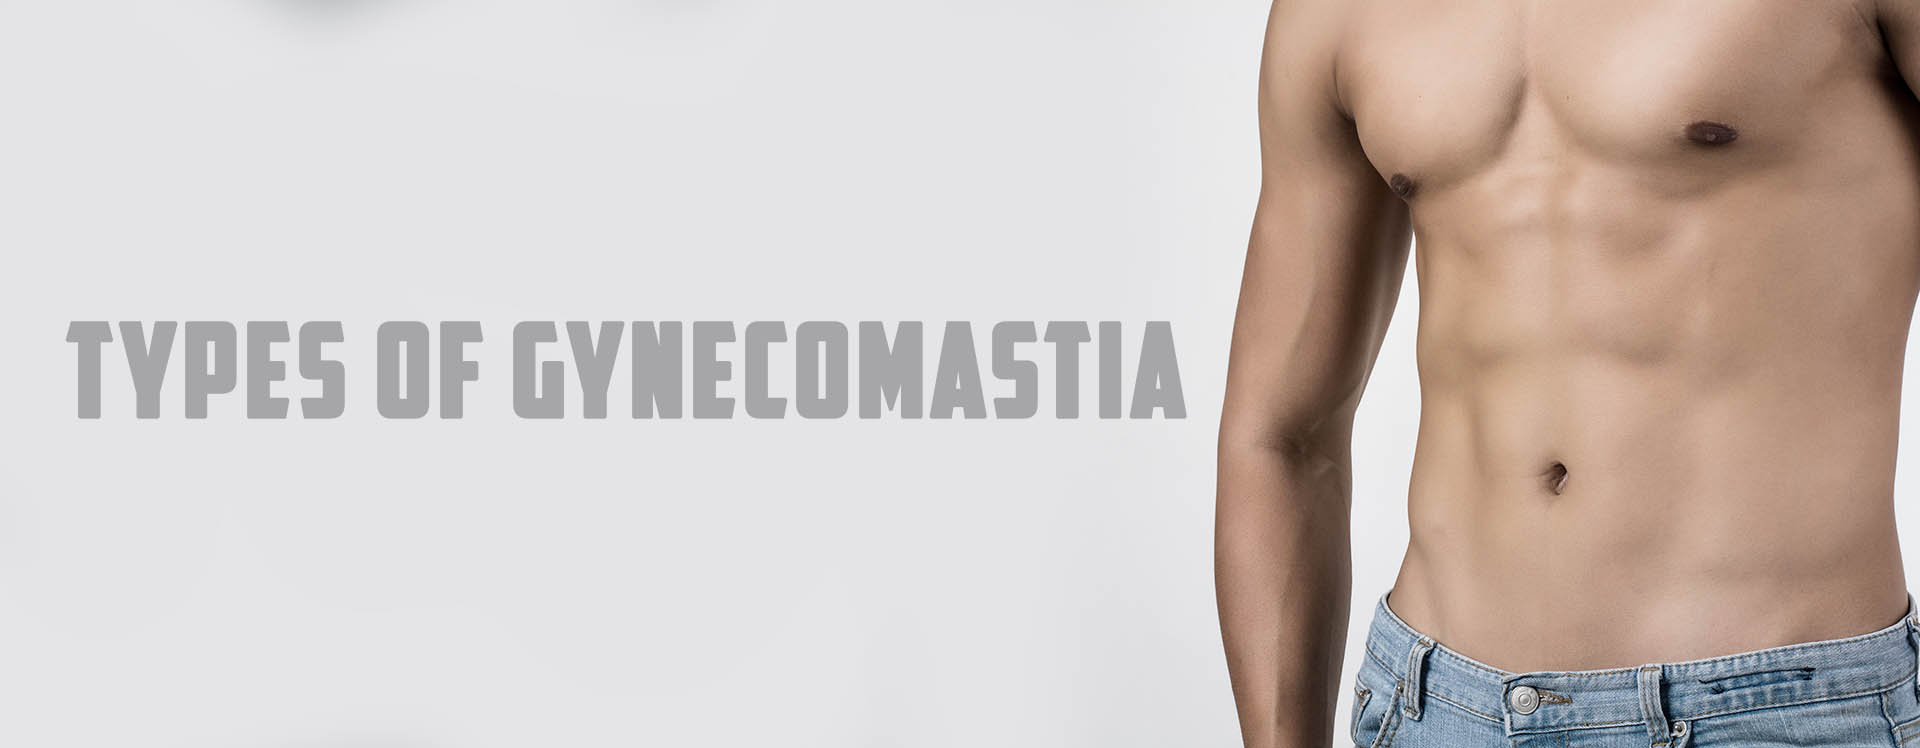 Gynecomastia | Male Breast Correction Surgical Treatment | Male Chest Correction